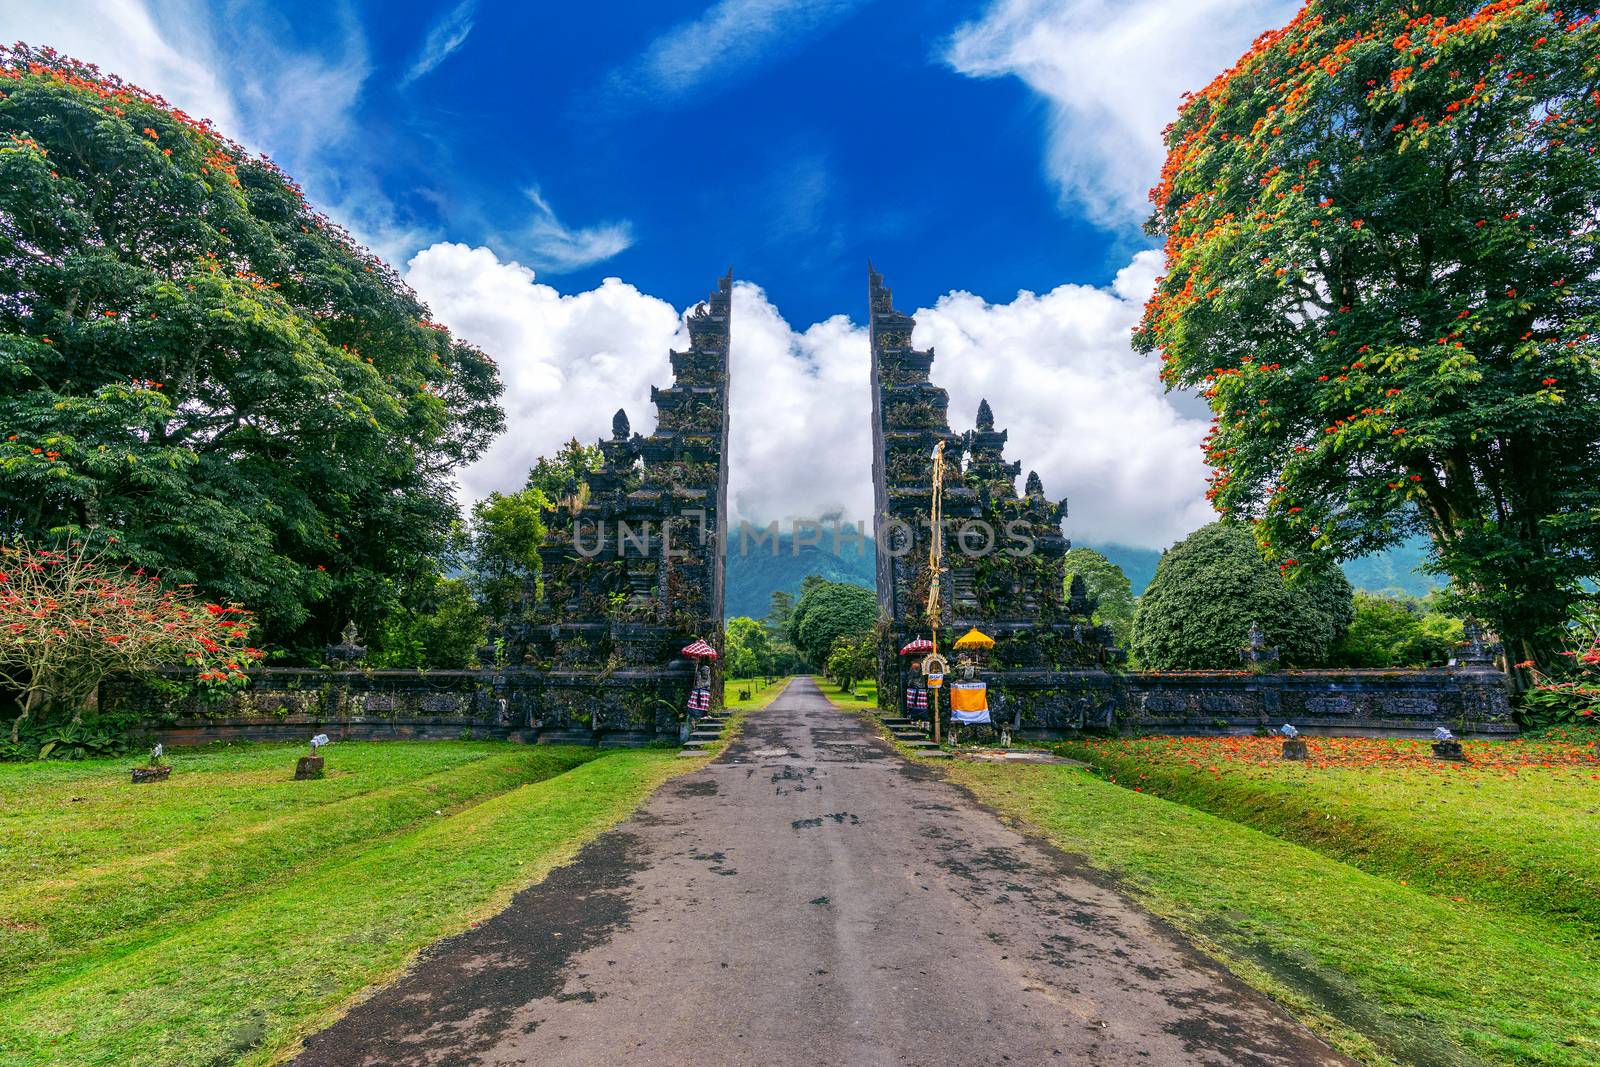 Big entrance gate in Bali, Indonesia.